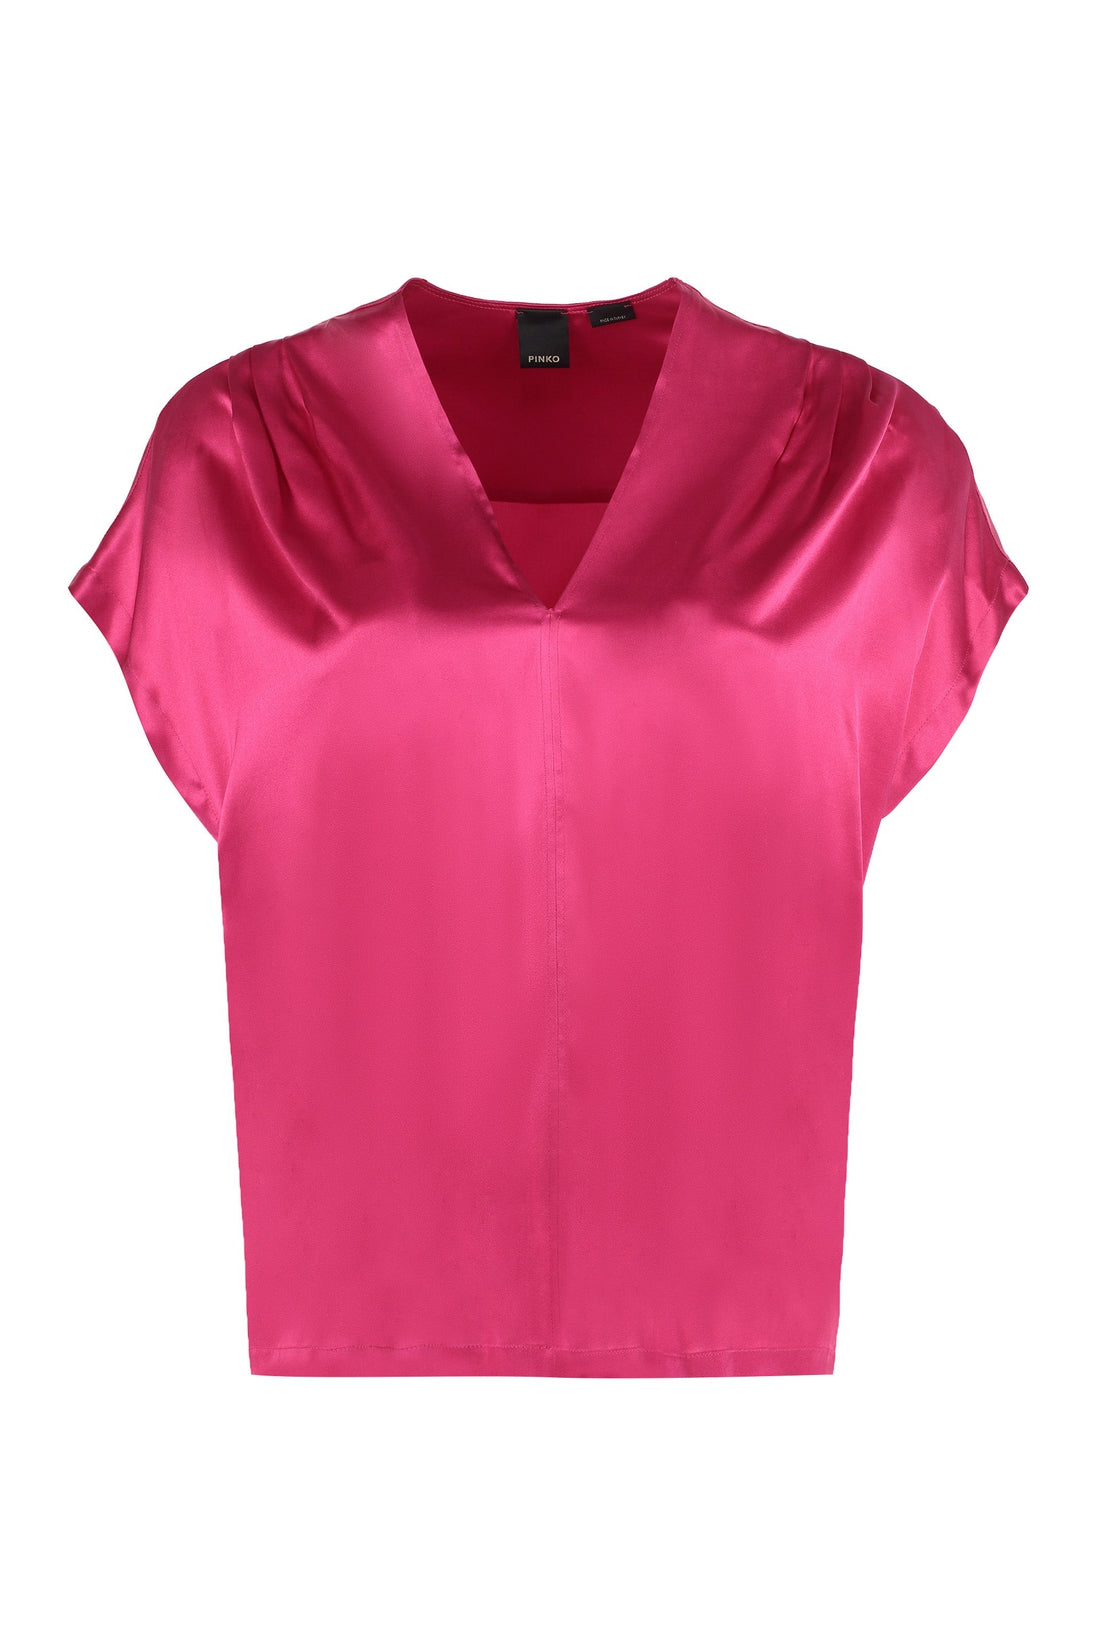 Pinko-OUTLET-SALE-Breve silk blouse-ARCHIVIST